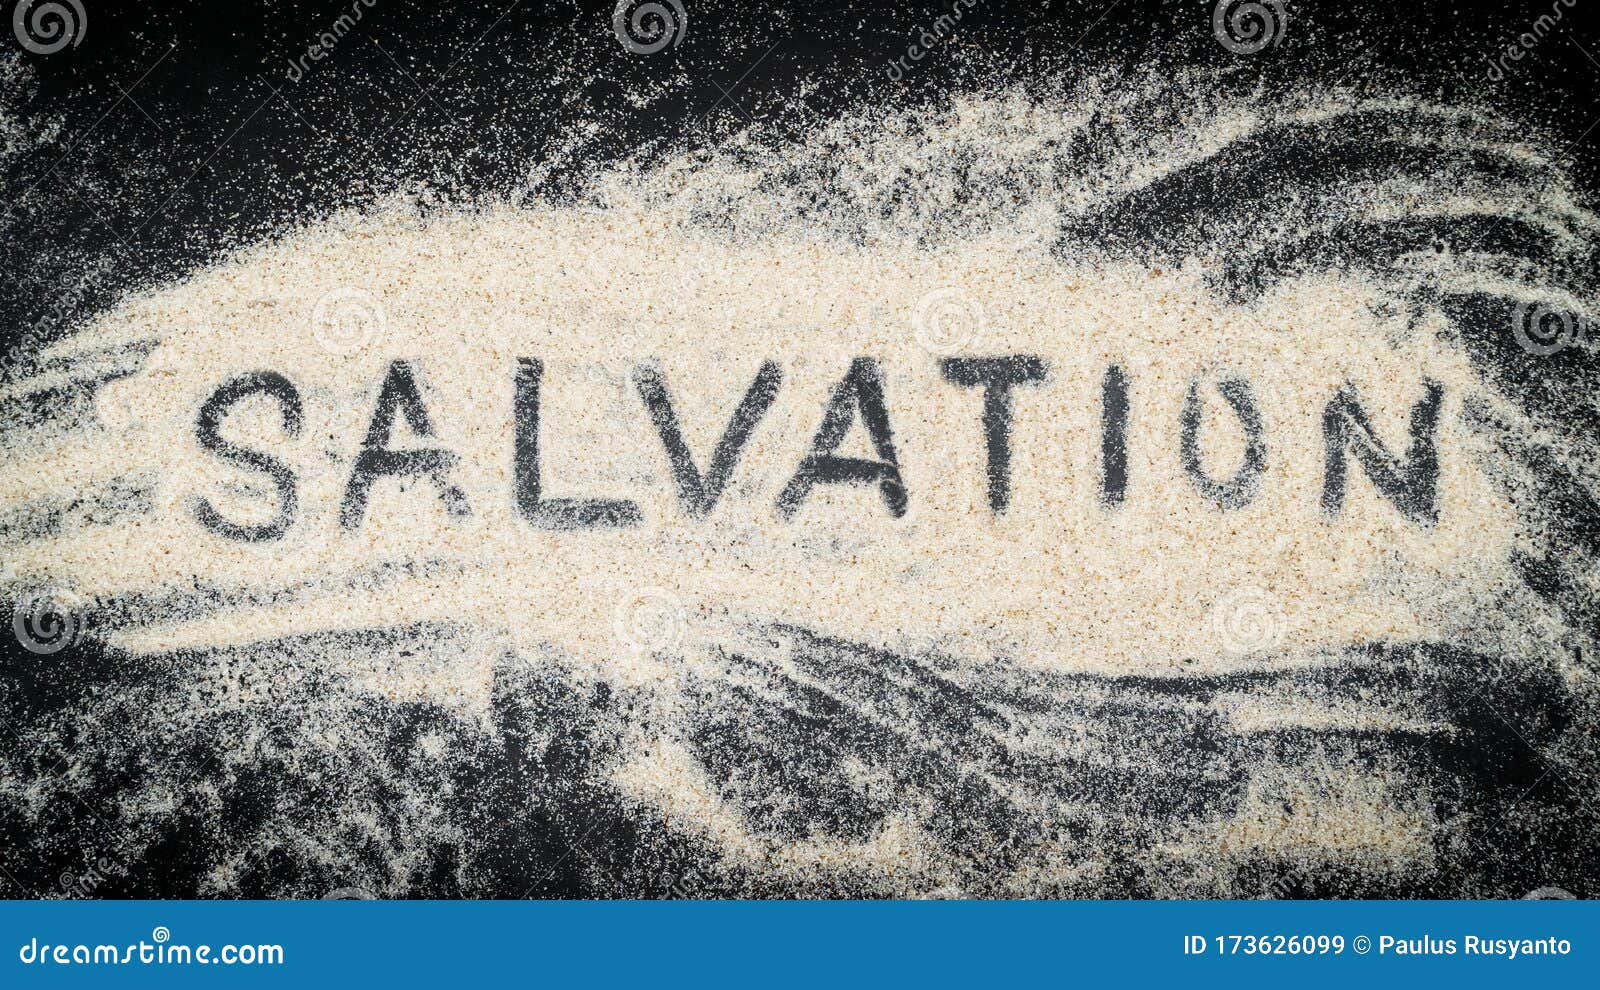 flat lay of salvation word written on white sand